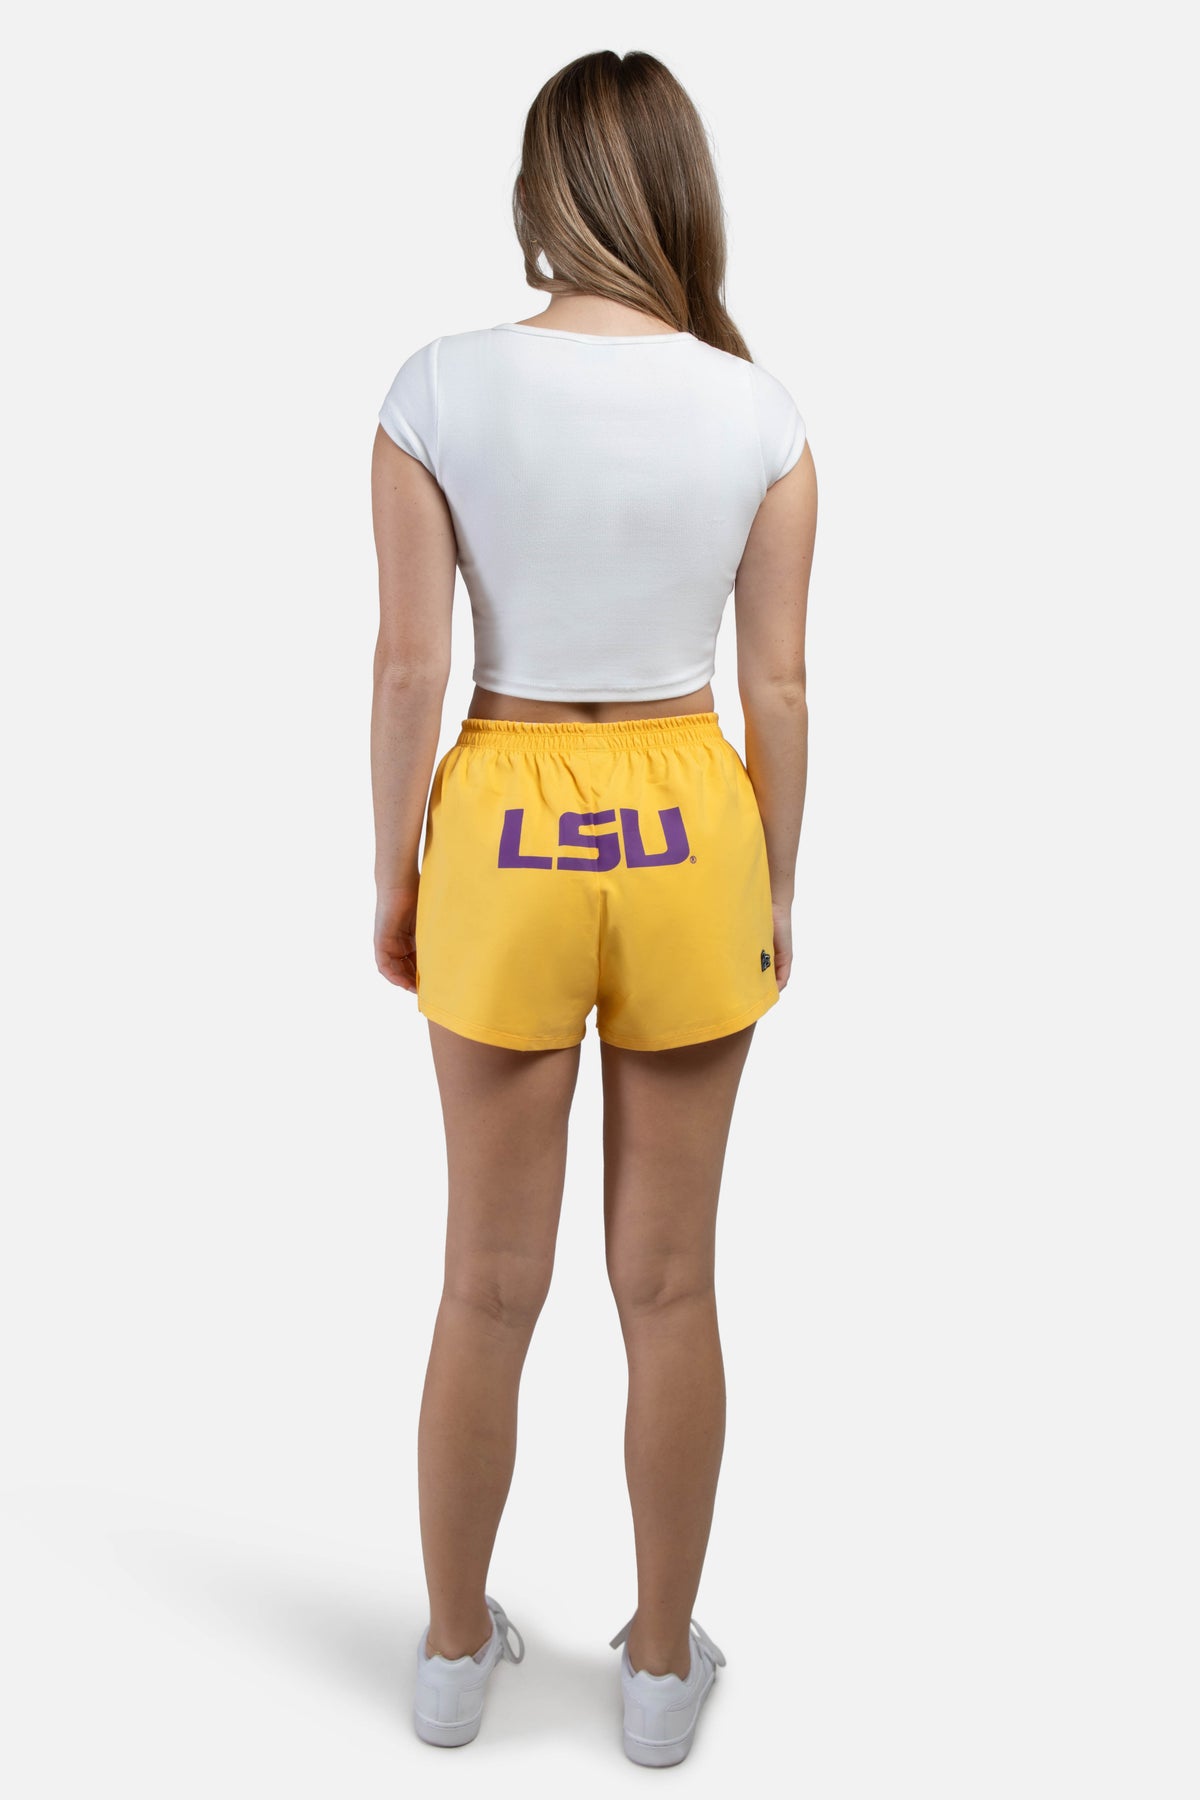 Louisiana State University P.E. Shorts